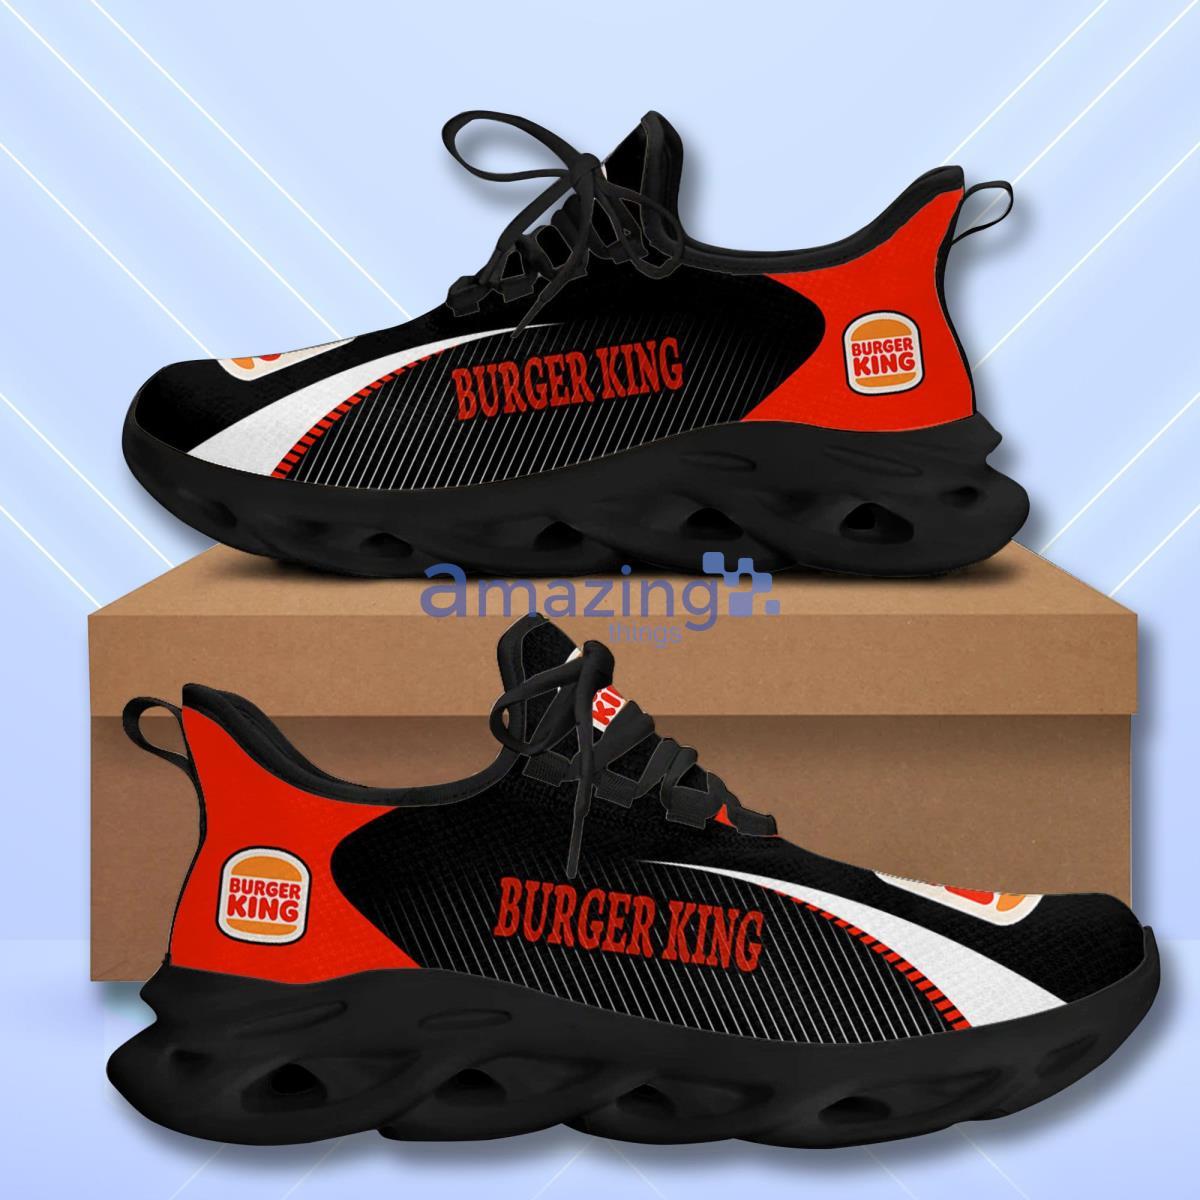 Burger King Max Soul Shoes Hot Trending For Men Women Product Photo 1